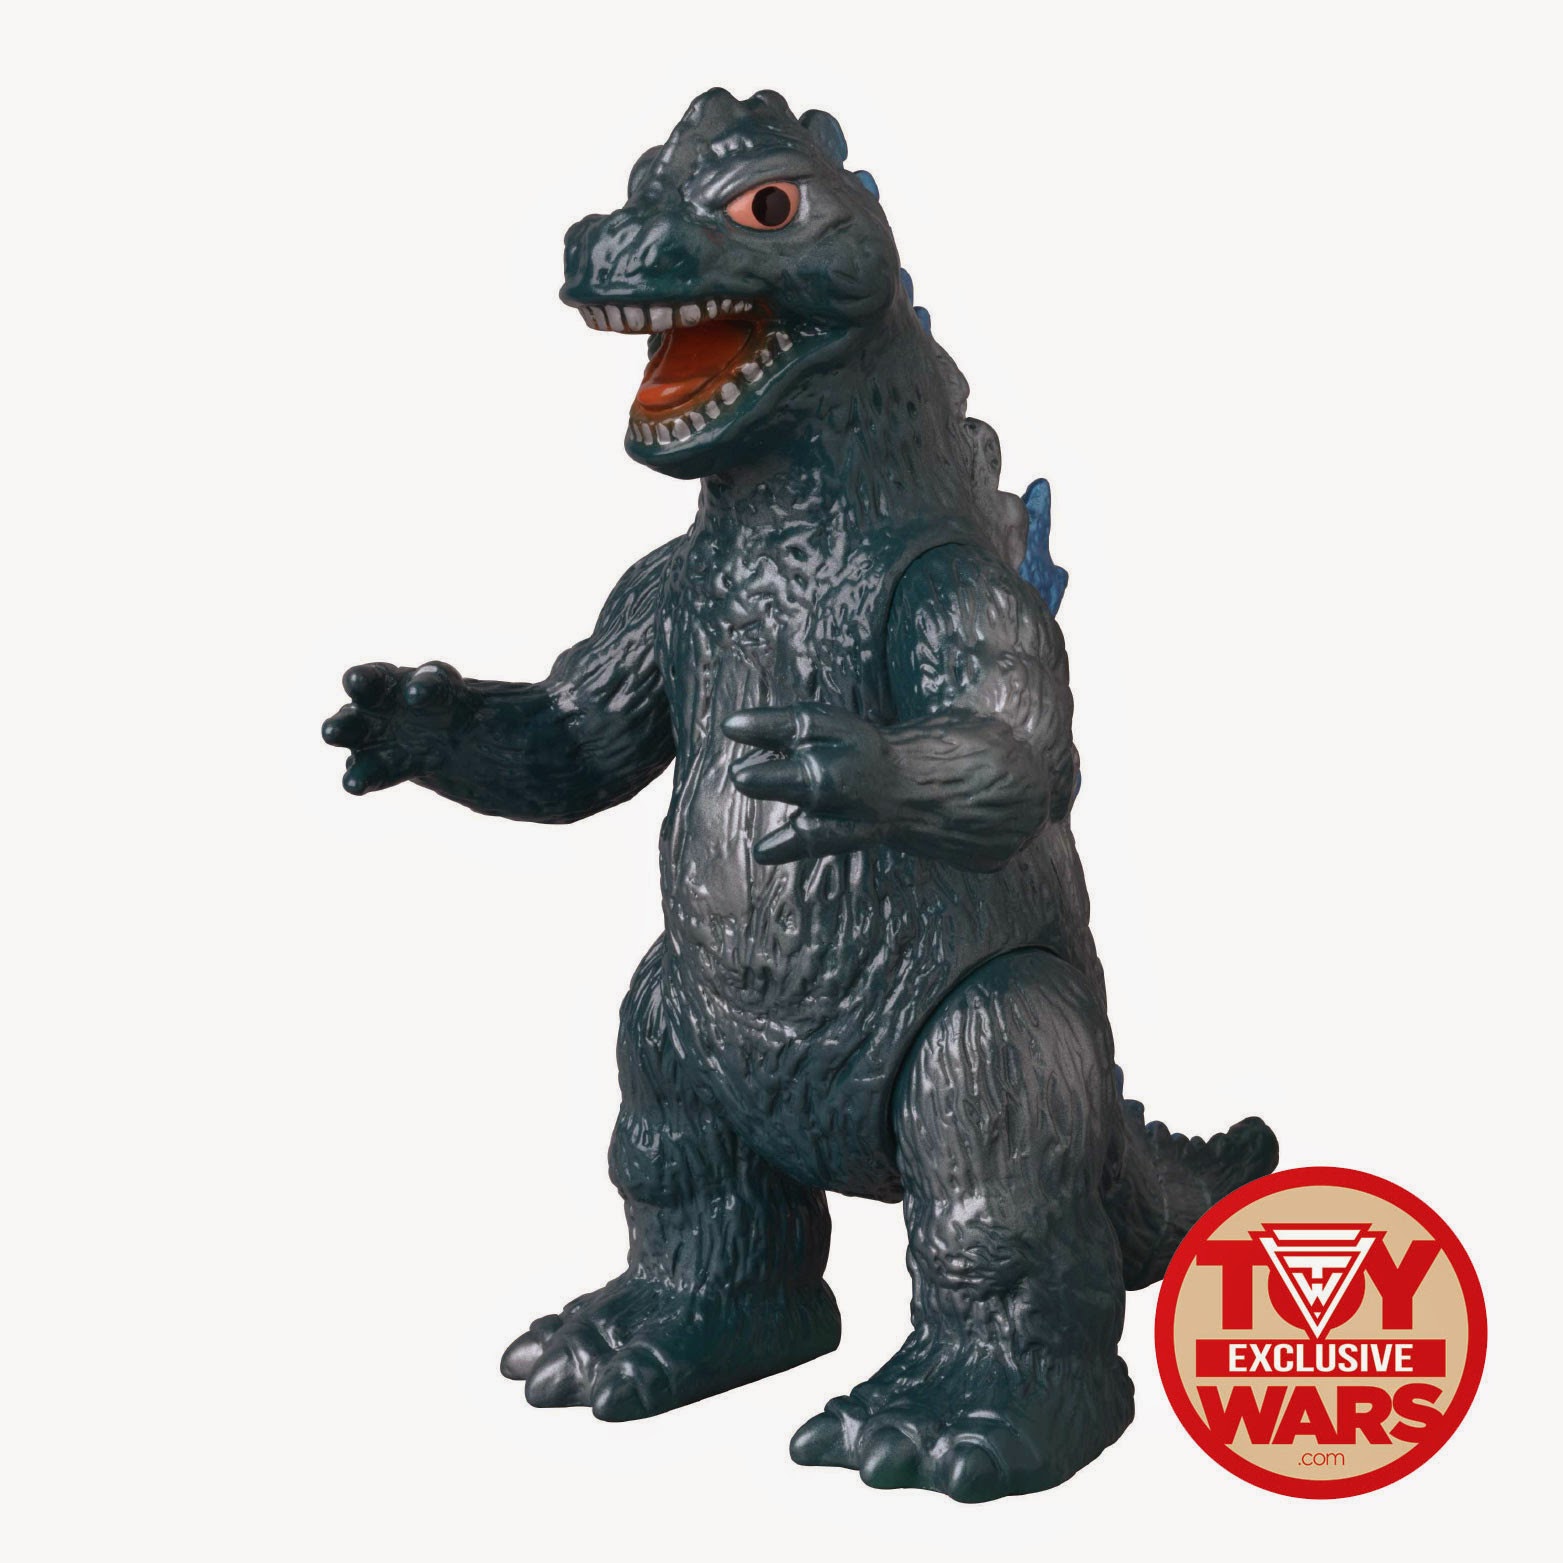 Toy Wars Exclusive Godzilla Bullmark Sofubi by Medicom